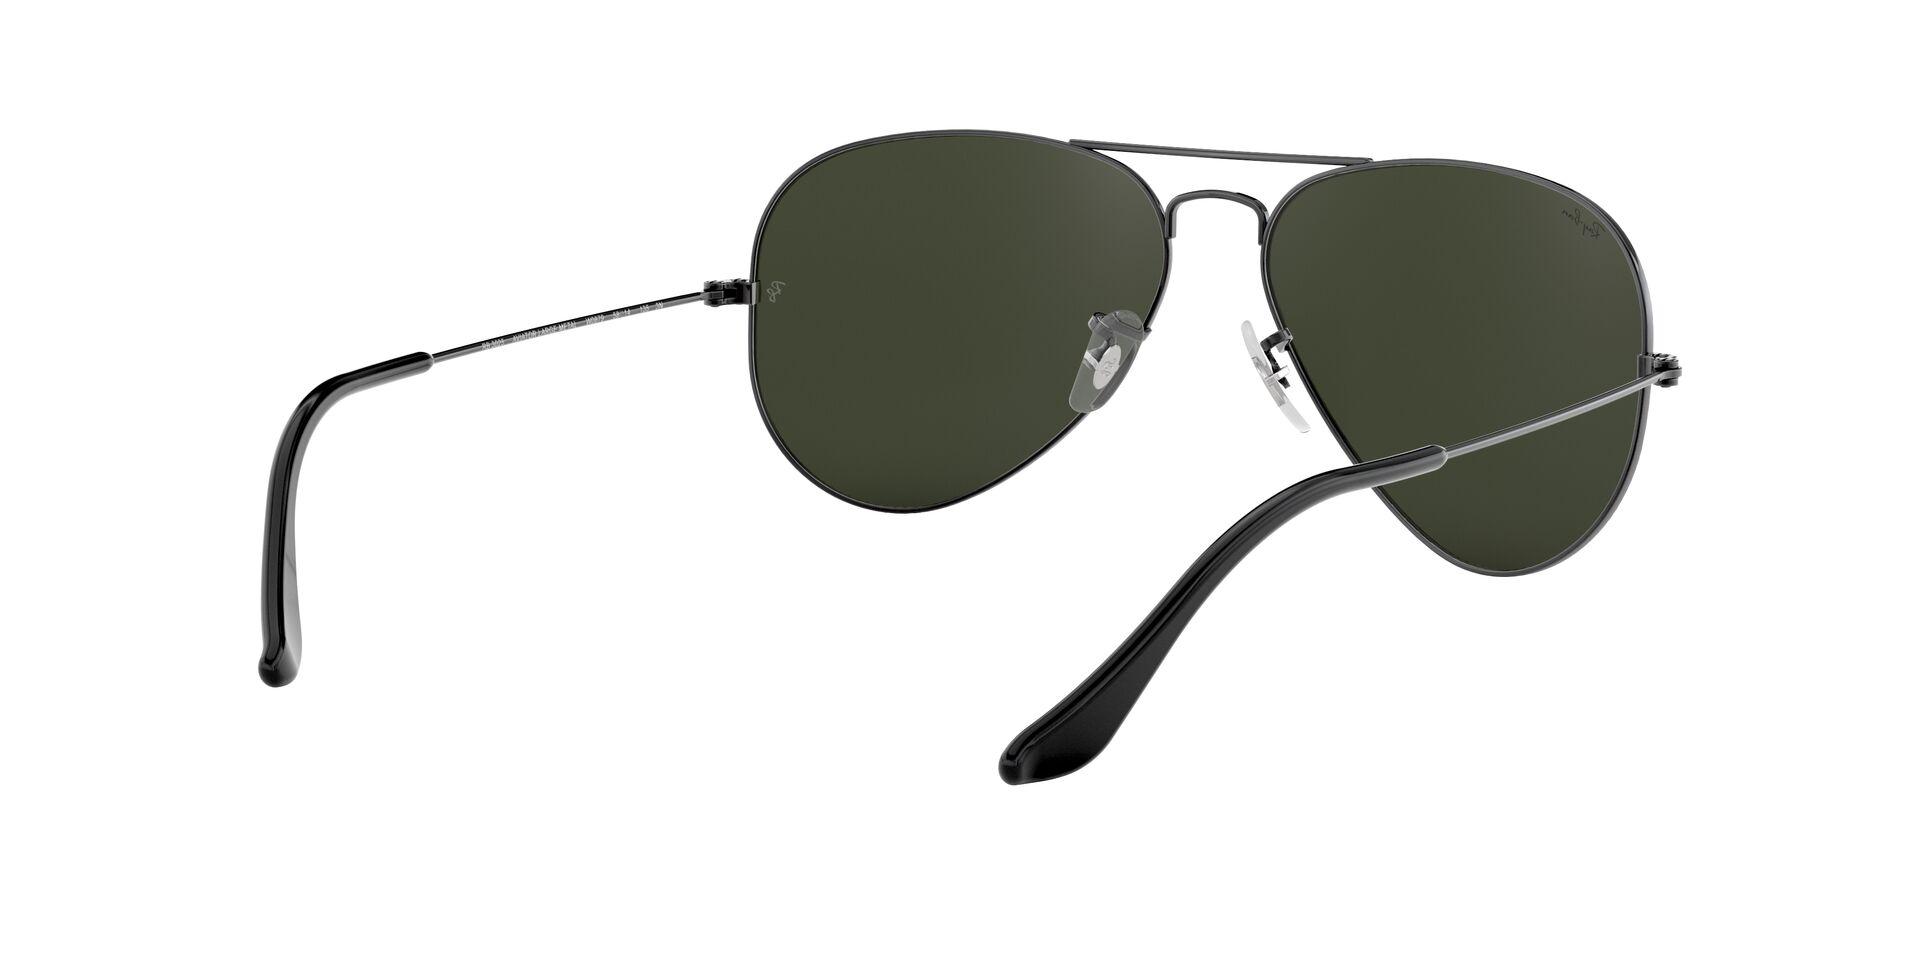 Mắt Kính Ray-Ban Aviator Large Metal - RB3025 W0879 -Sunglasses